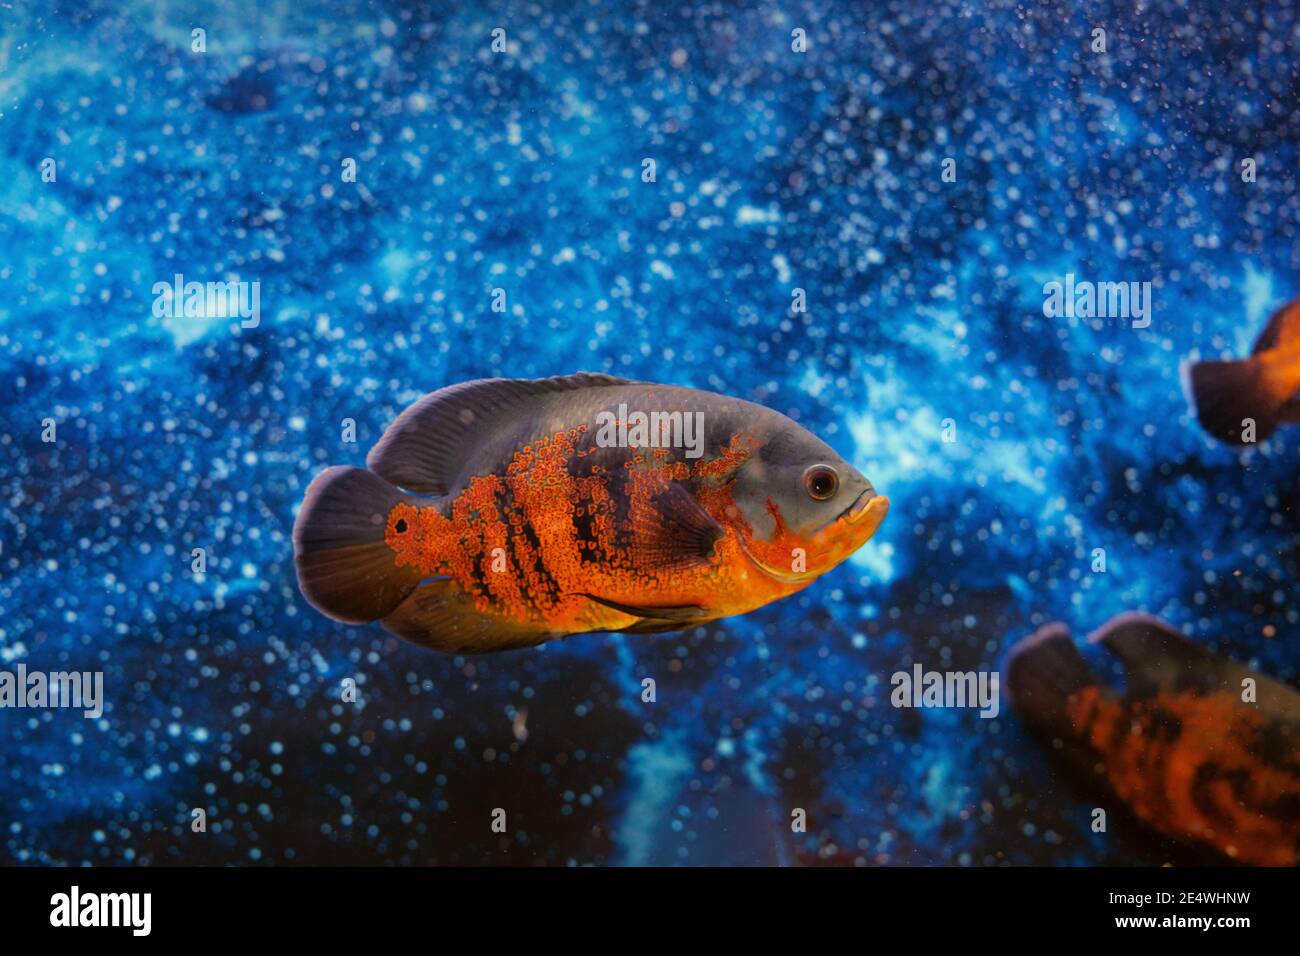 Oscar Fish or astronotus ocellatus on blue blur water background in aquarium Stock Photo